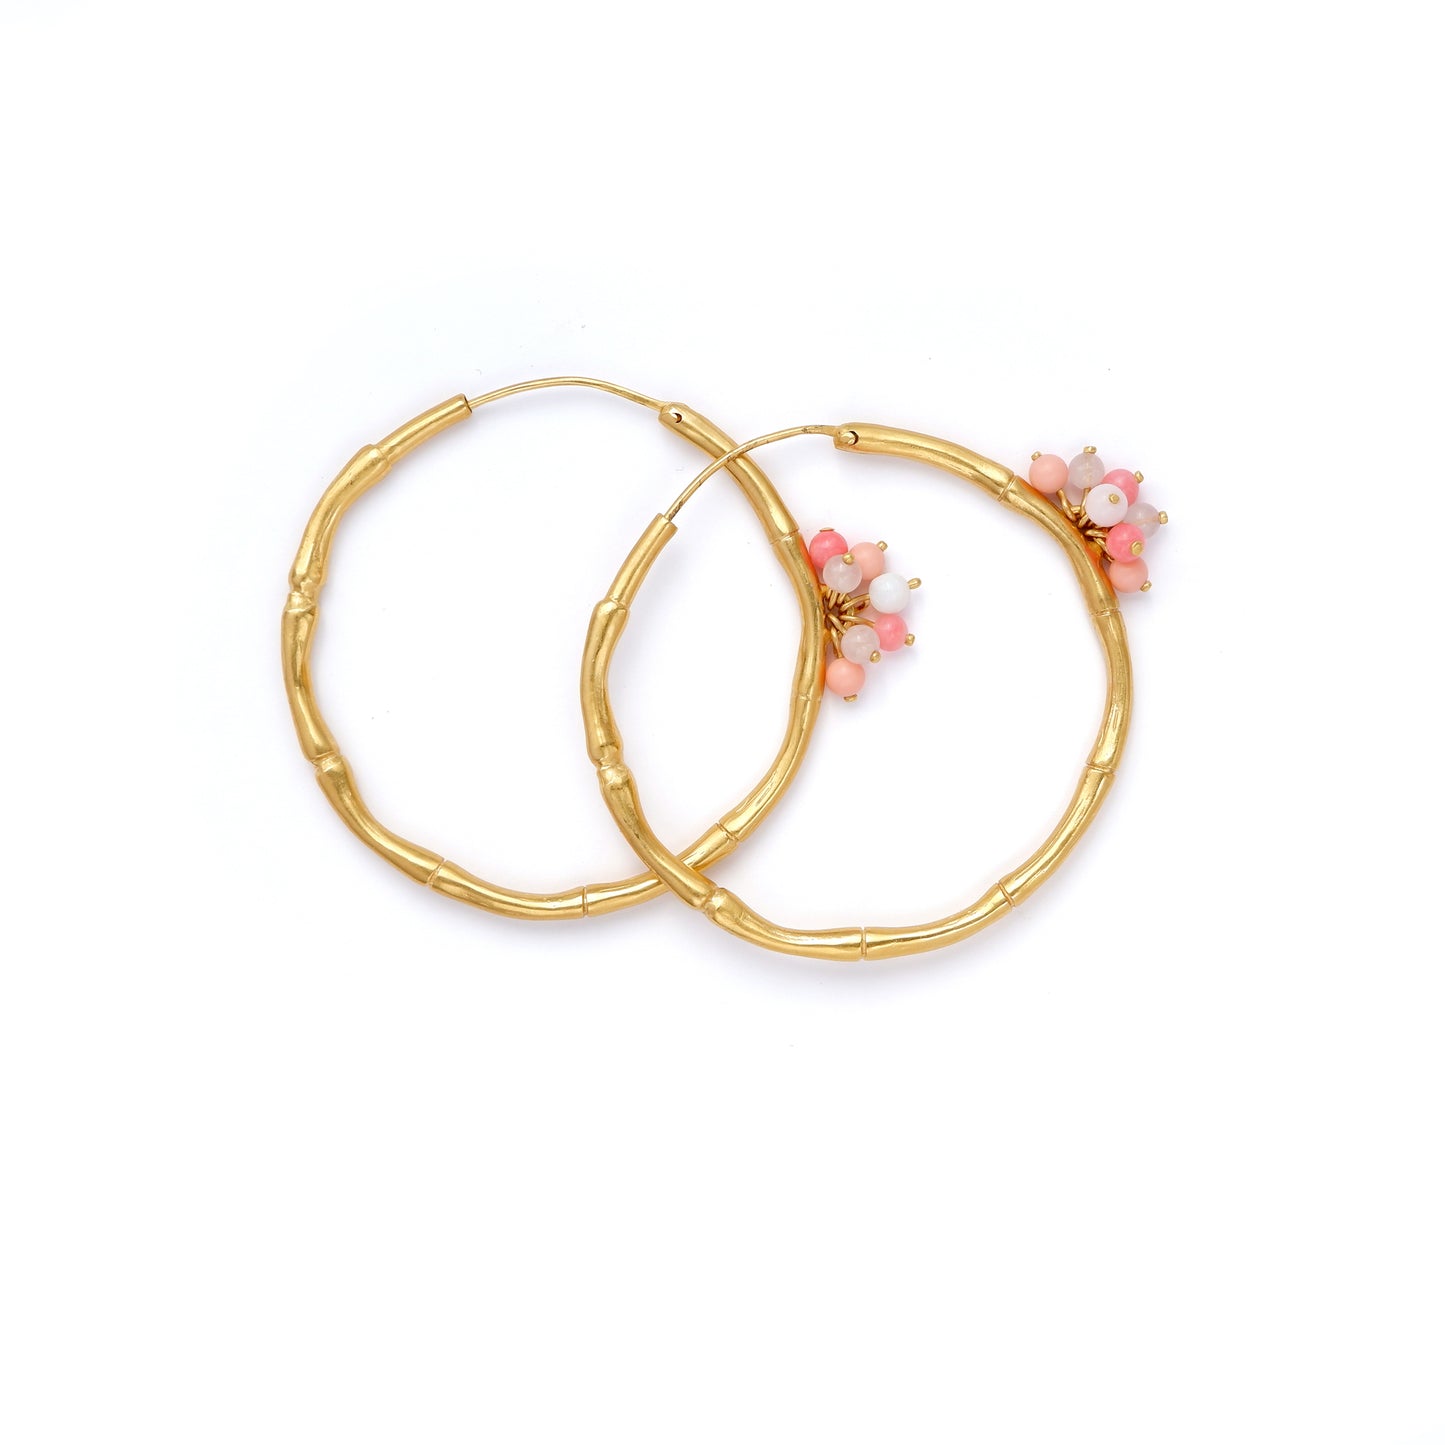 Gold Vermeil Bamboo Hoops medium size, pink gemstone Bauble beads